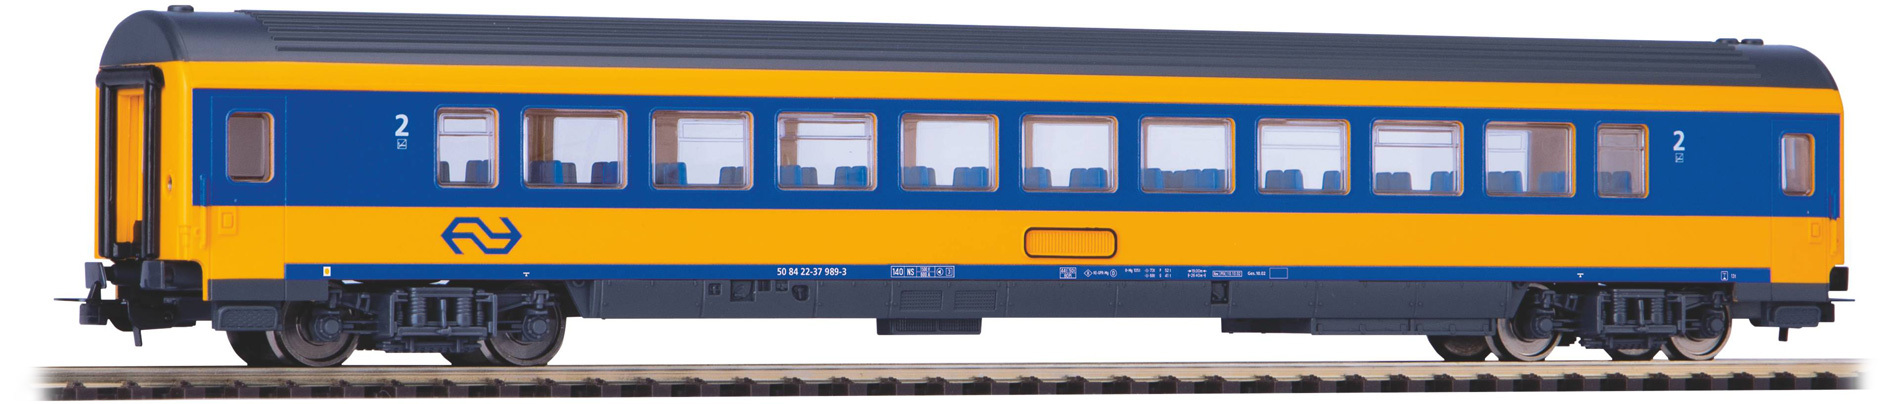 Купить н вагон. Piko вагон пассажирский Piko Modellbahn GDR 1:87 ho. Piko 96975. Пассажирские вагоны Piko h0. Brawa пассажирский вагон (2 класс), 65201, n (1:160).